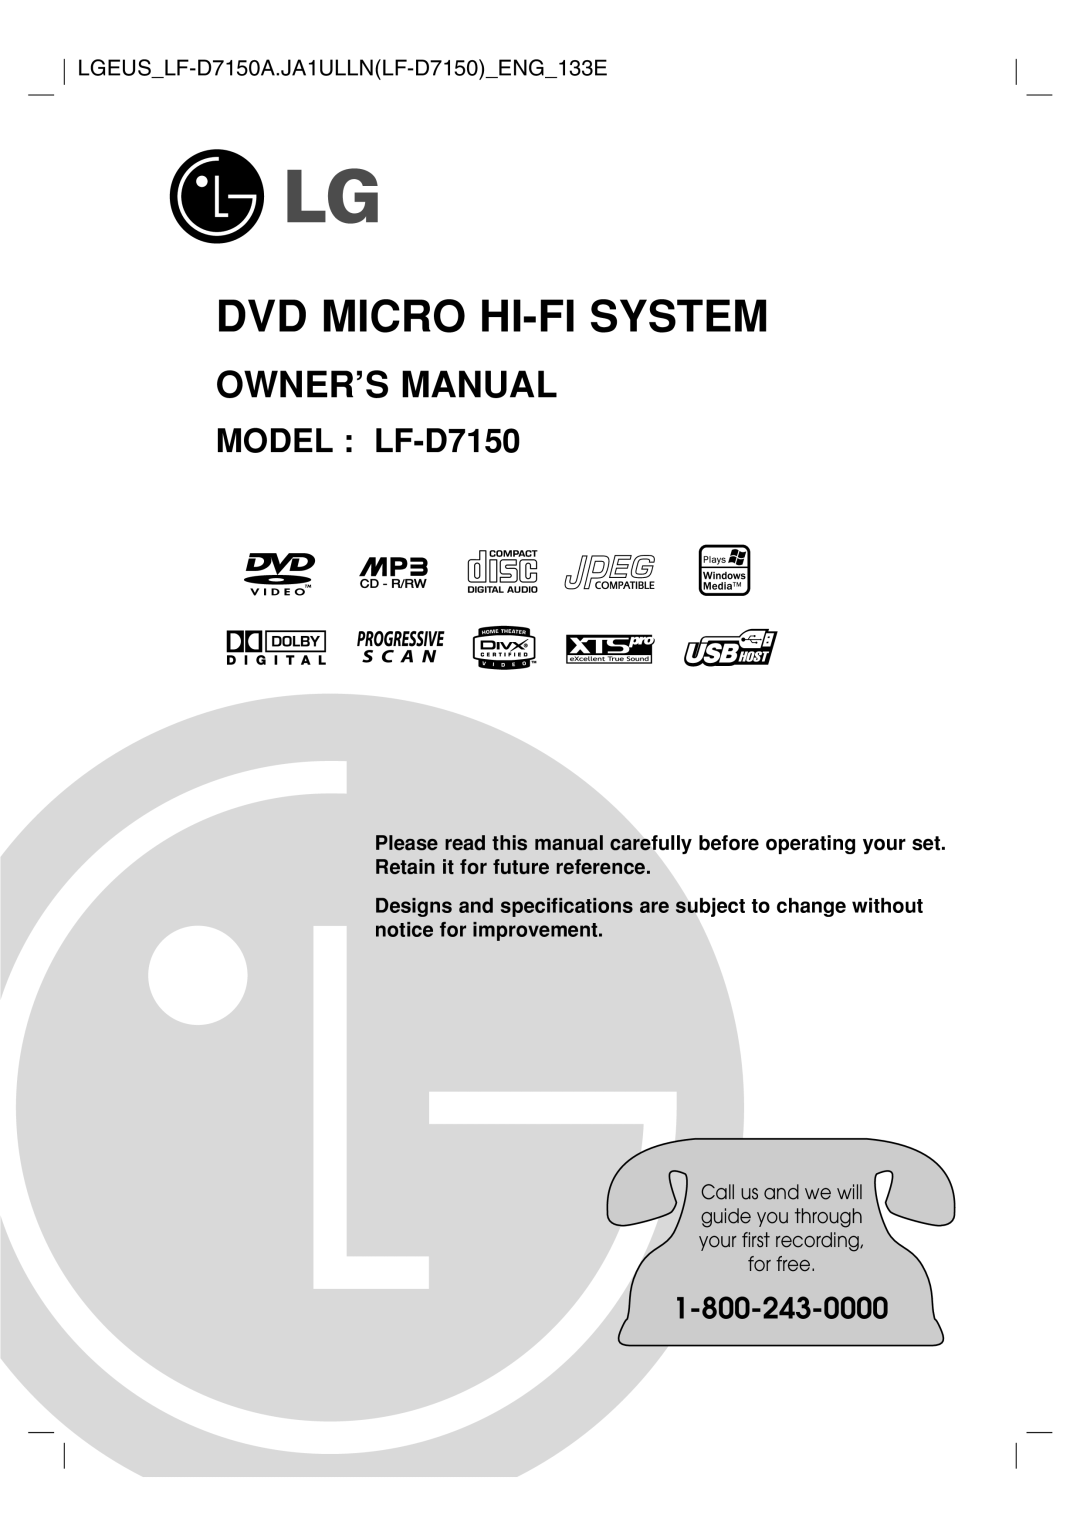 LG Electronics owner manual Owner’S Manual, Dvd Micro Hi-Fisystem, MODEL : LF-D7150, 1-800-243-0000 